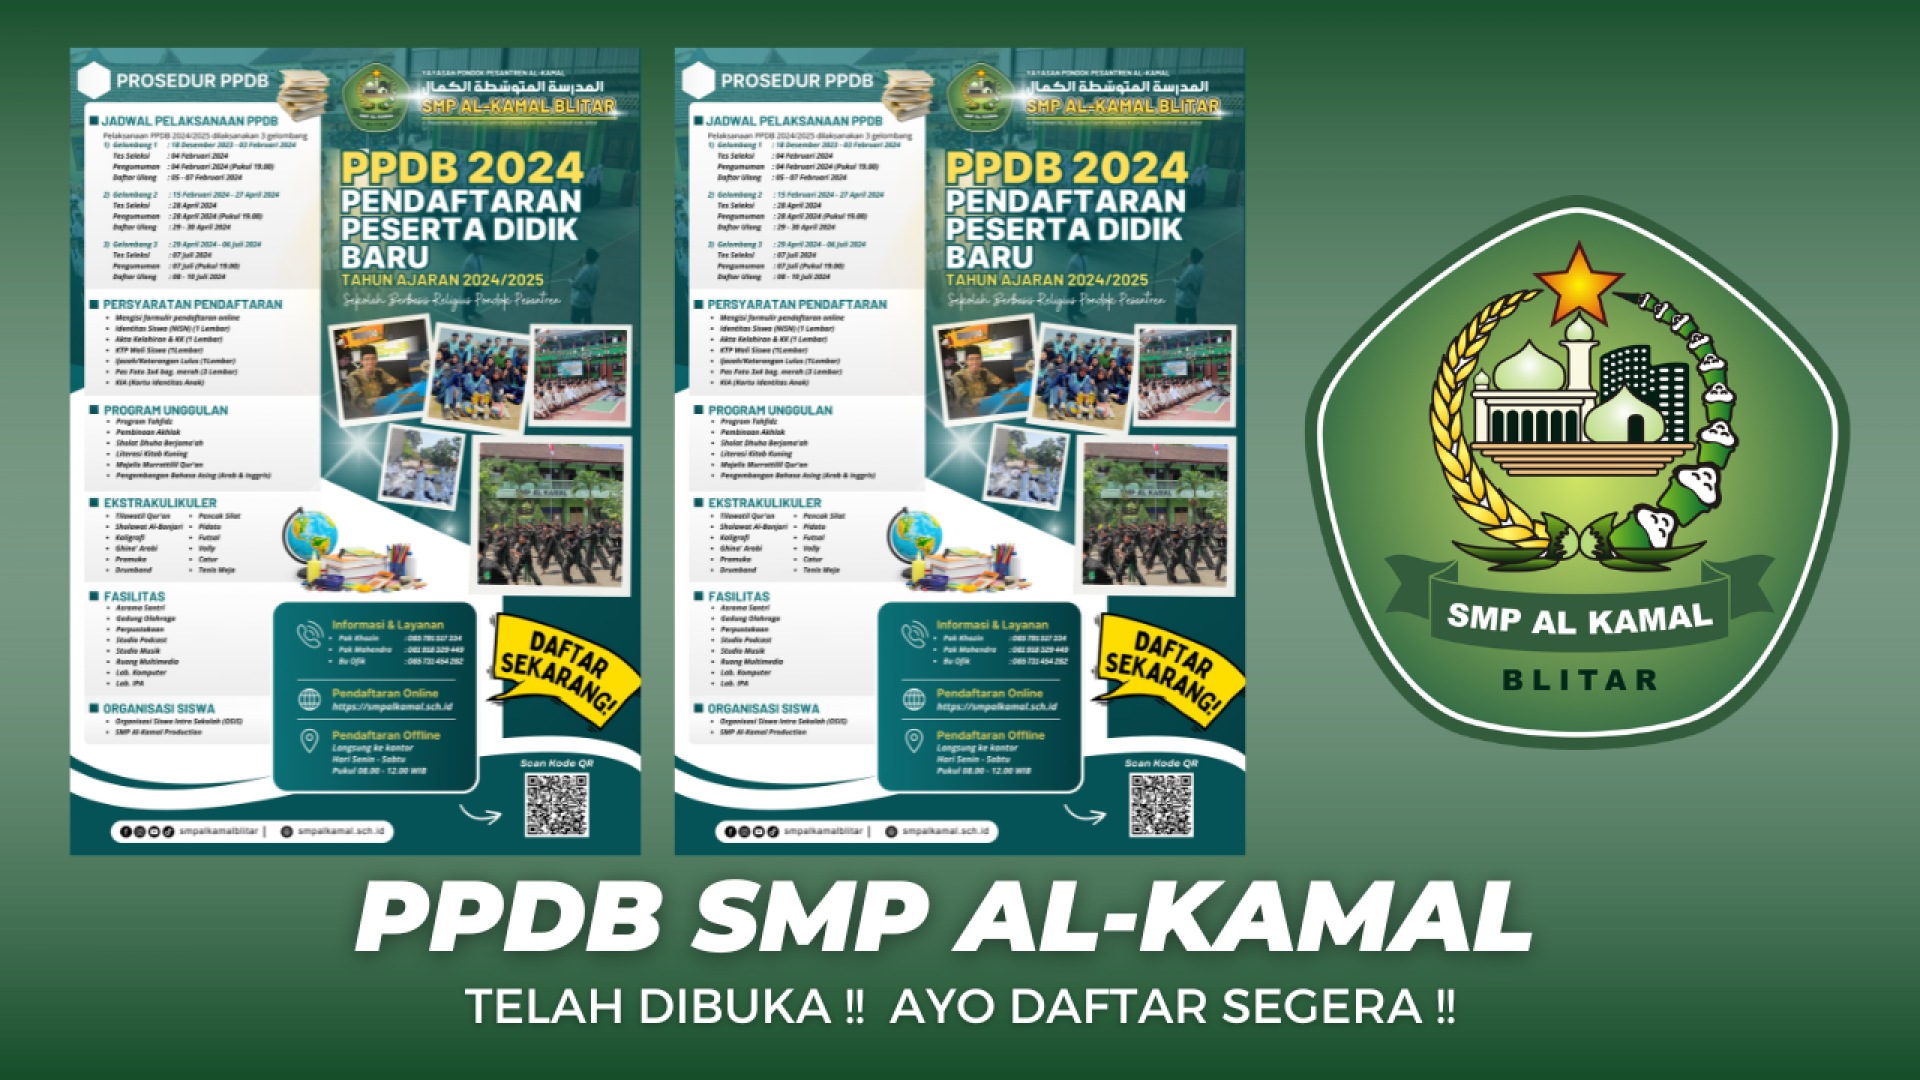 PPDB 2024 SMP AL-KAMAL